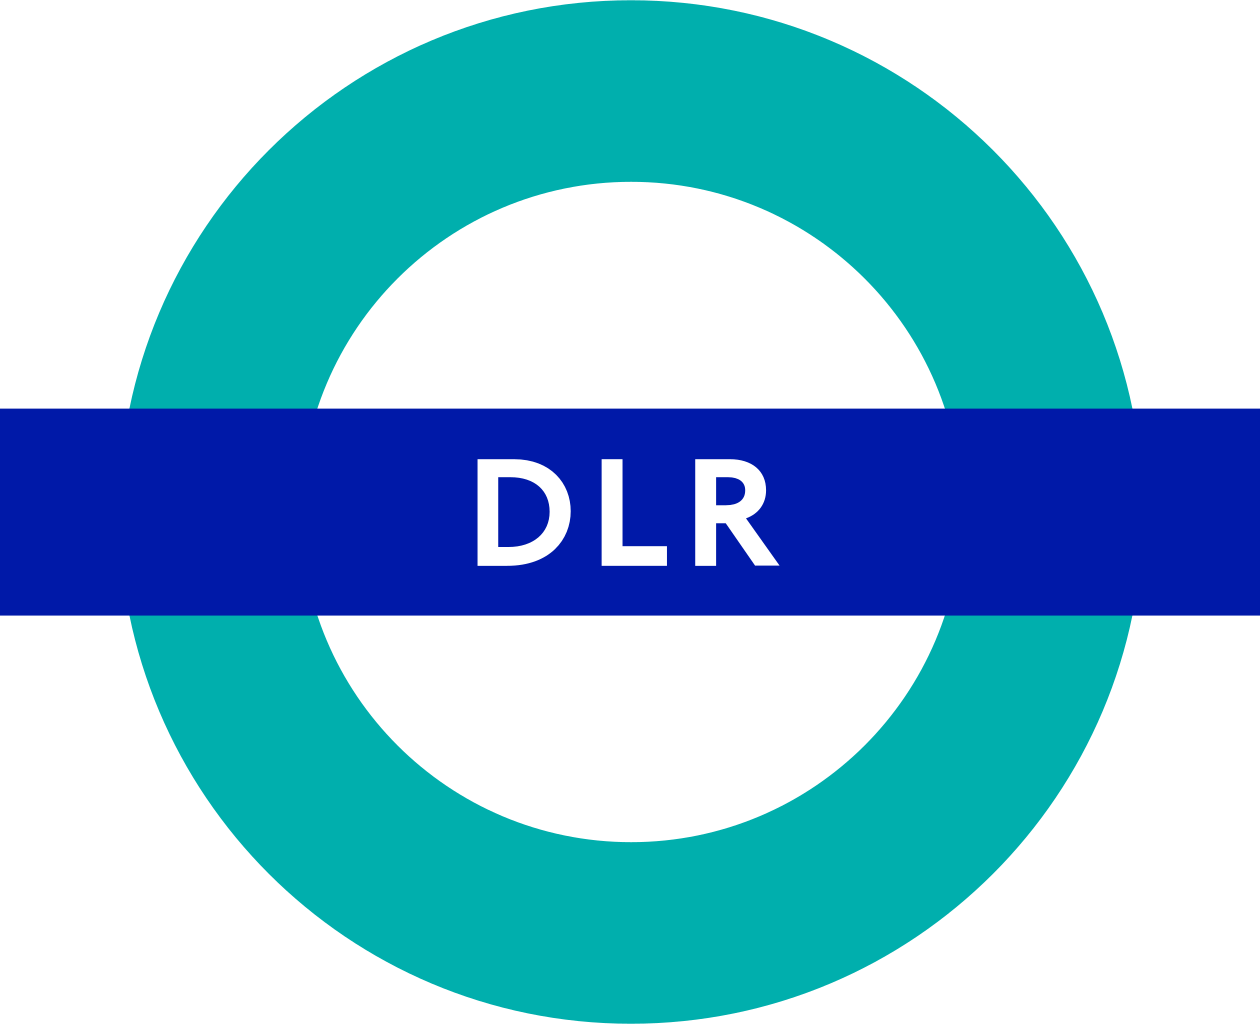 london tube lines ranked - dlr logo